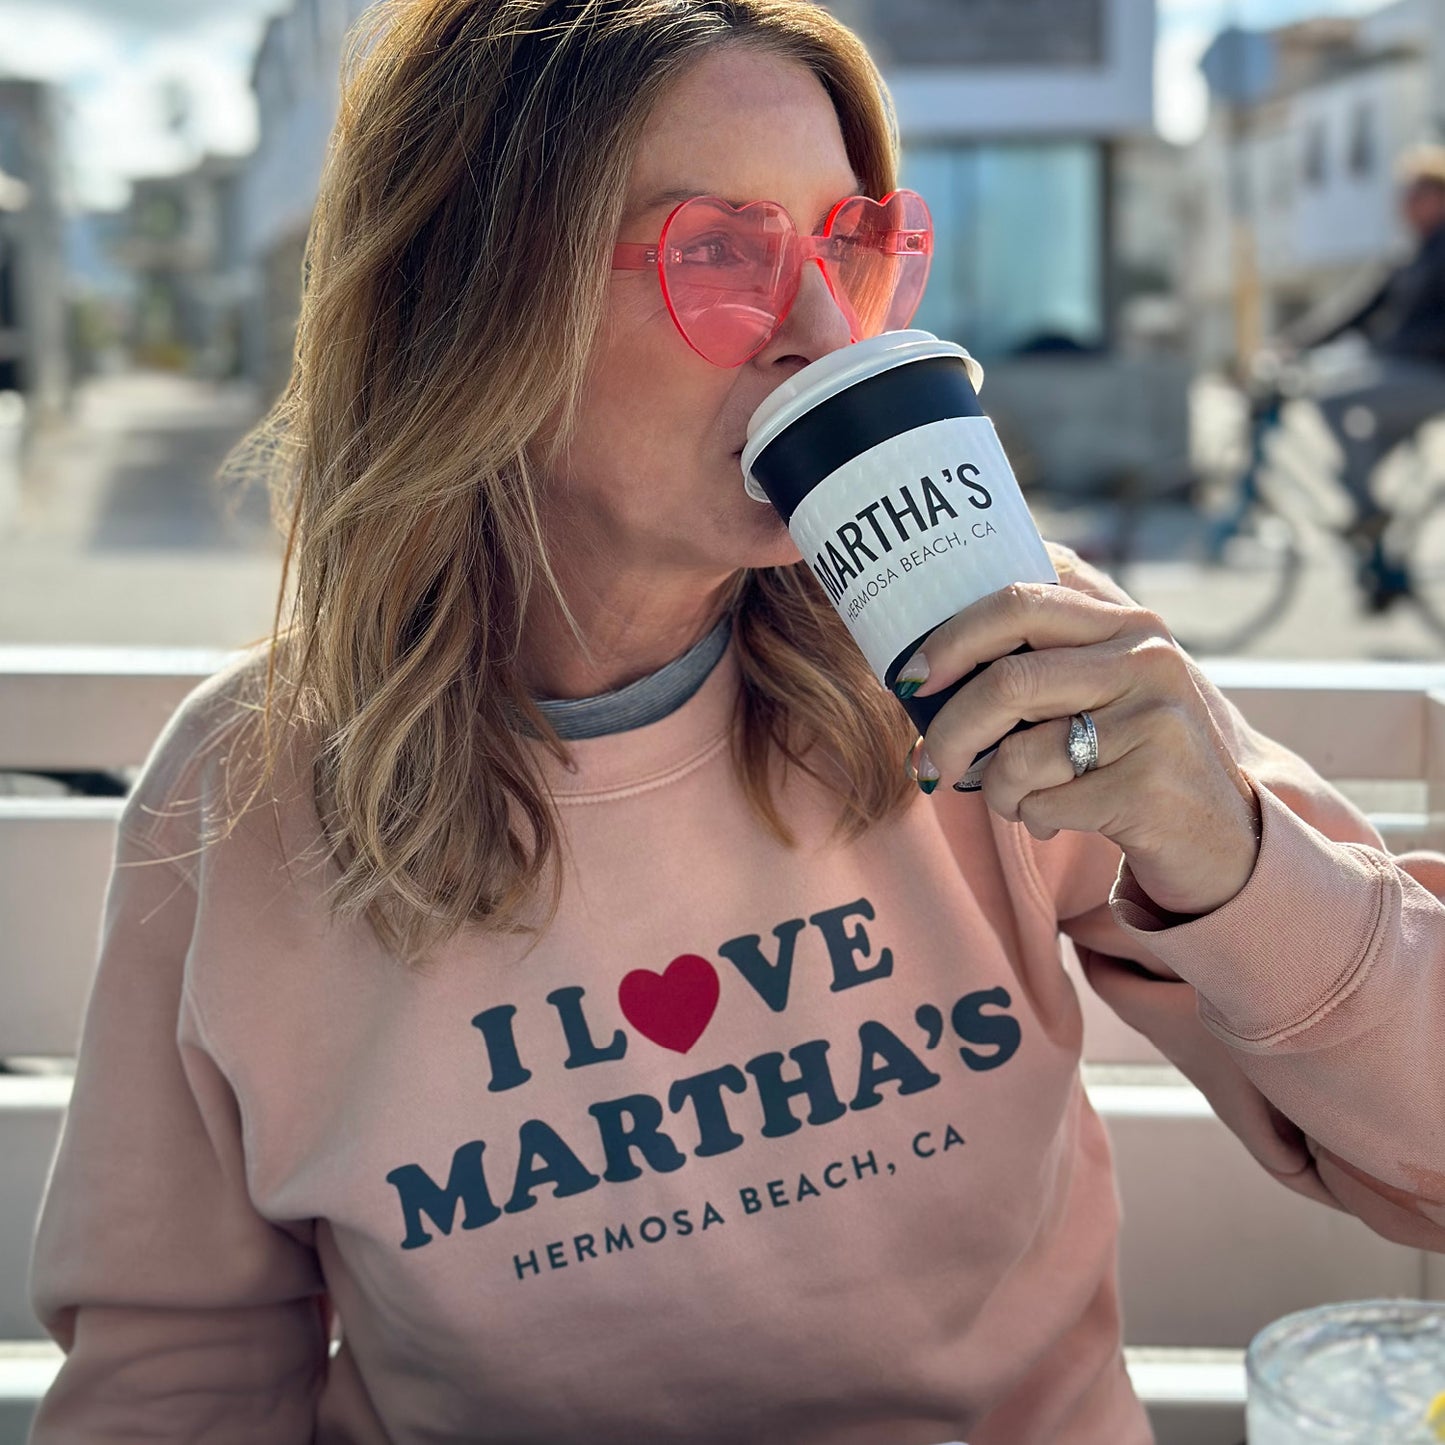 Love Martha's Crewneck Sweatshirt -Dusty Pink